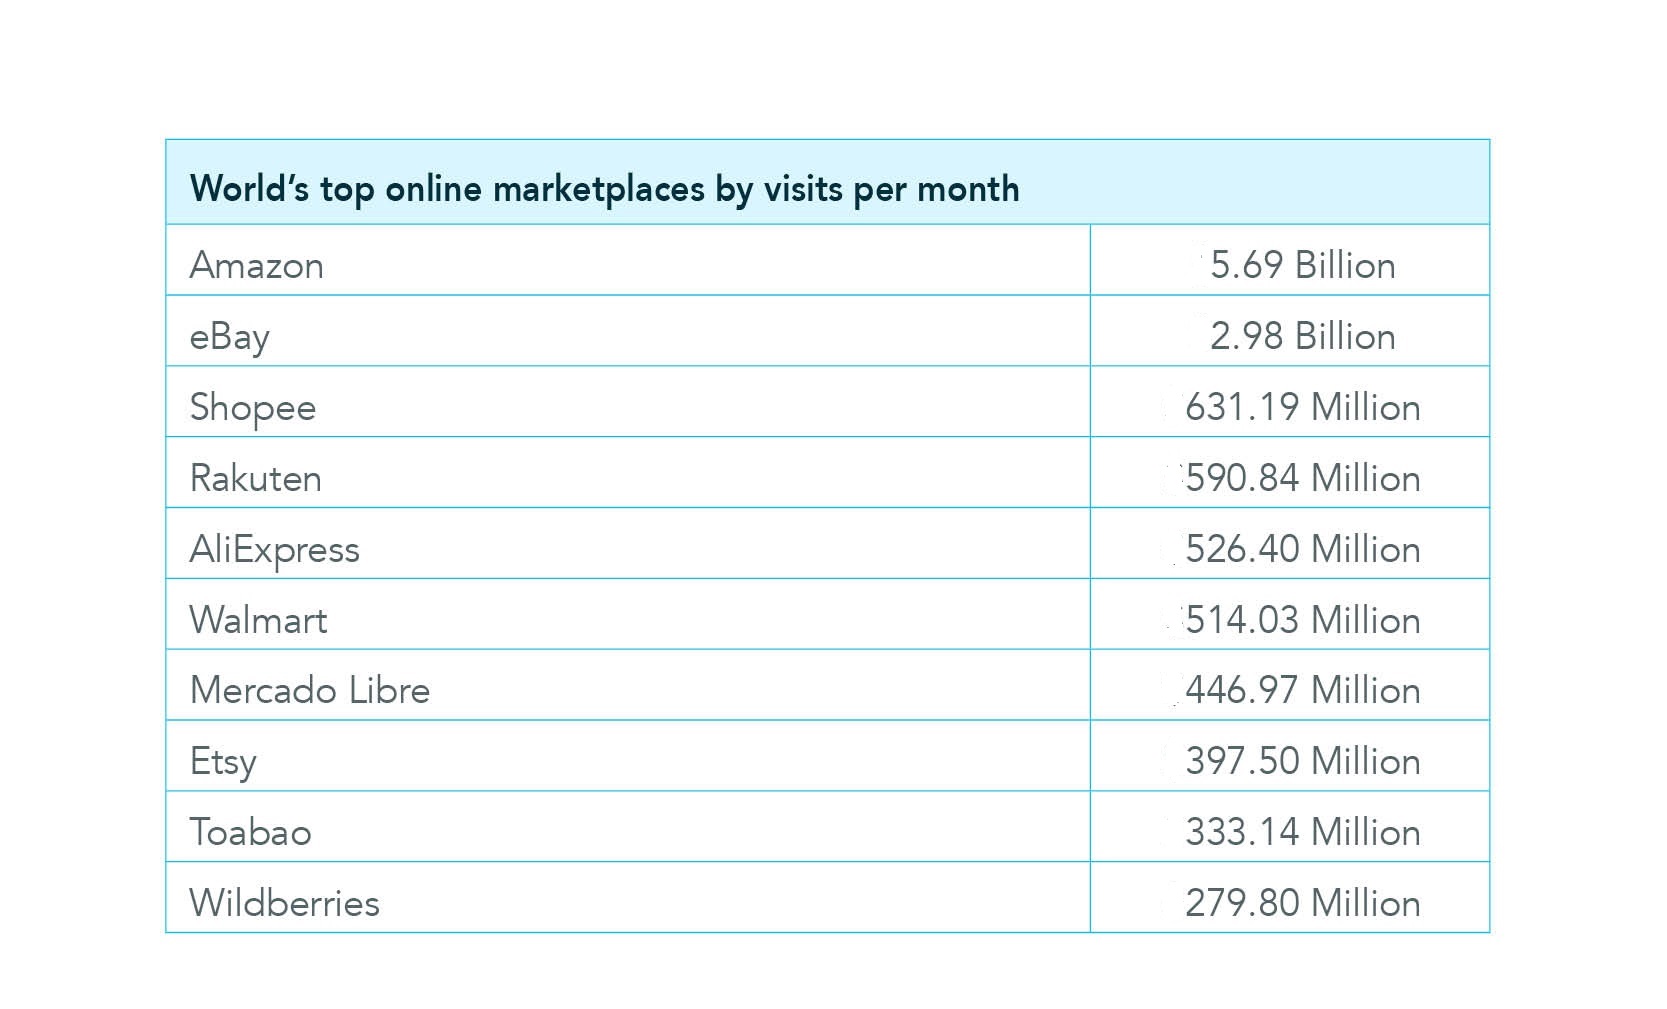 Online marketplaces visits per month